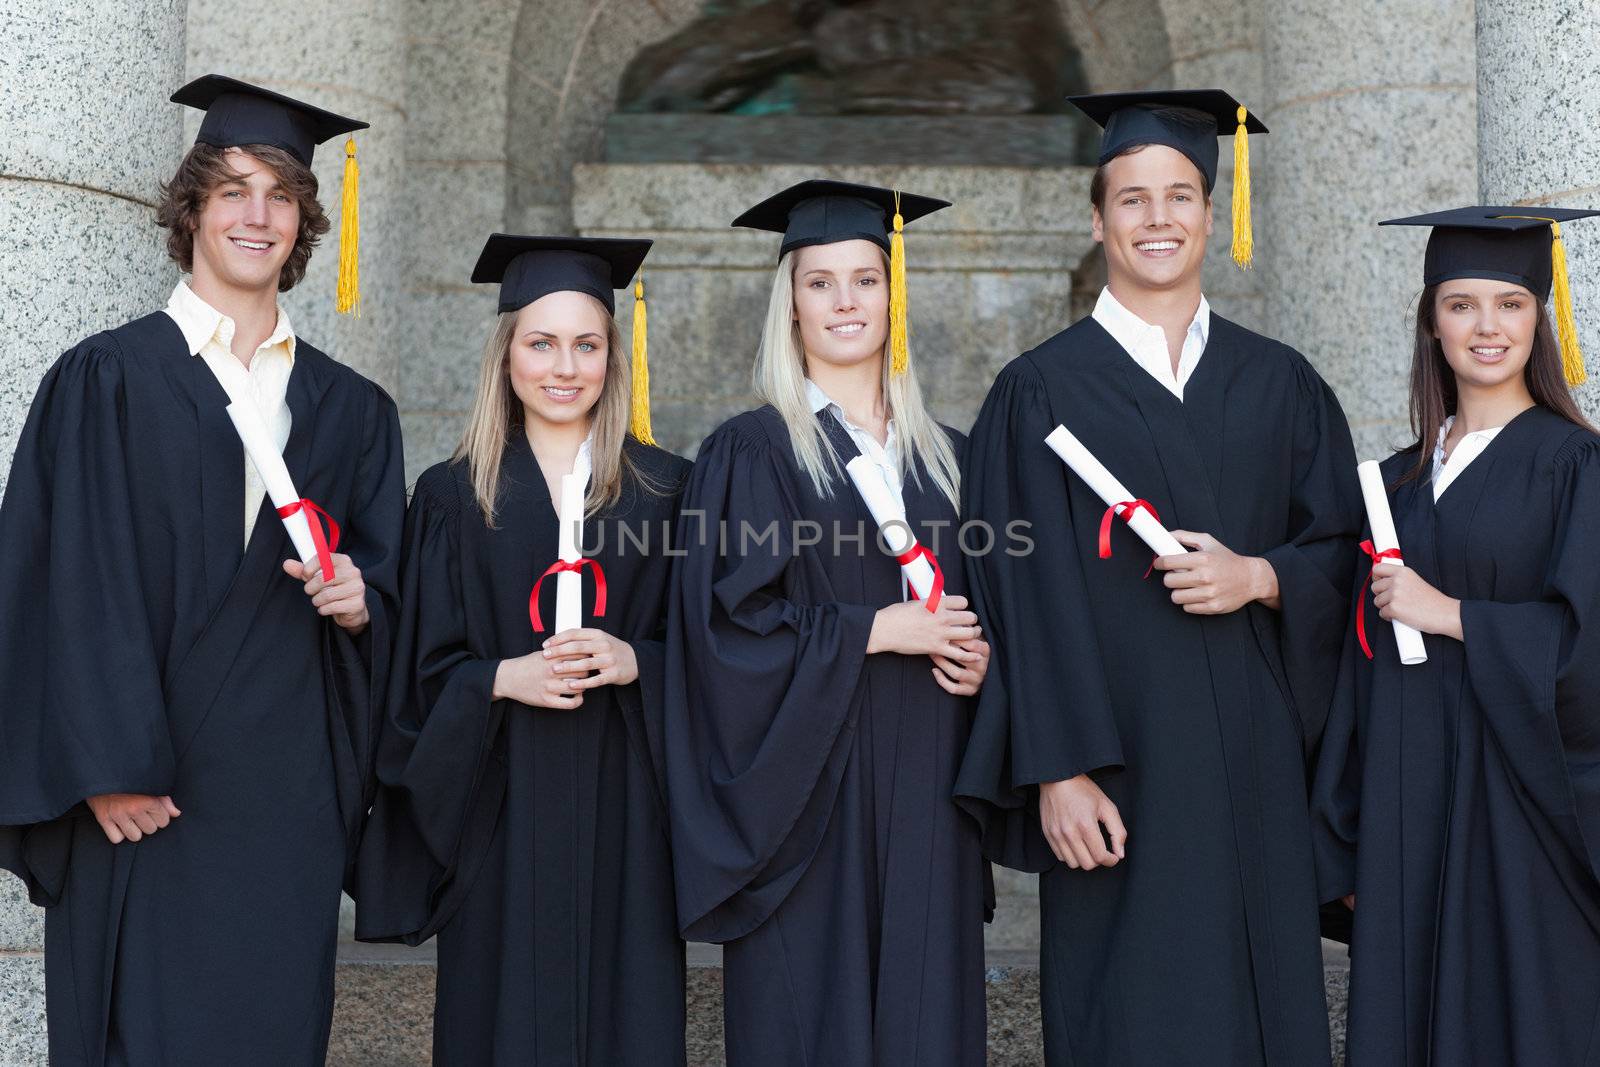 Smiling graduates posing by Wavebreakmedia